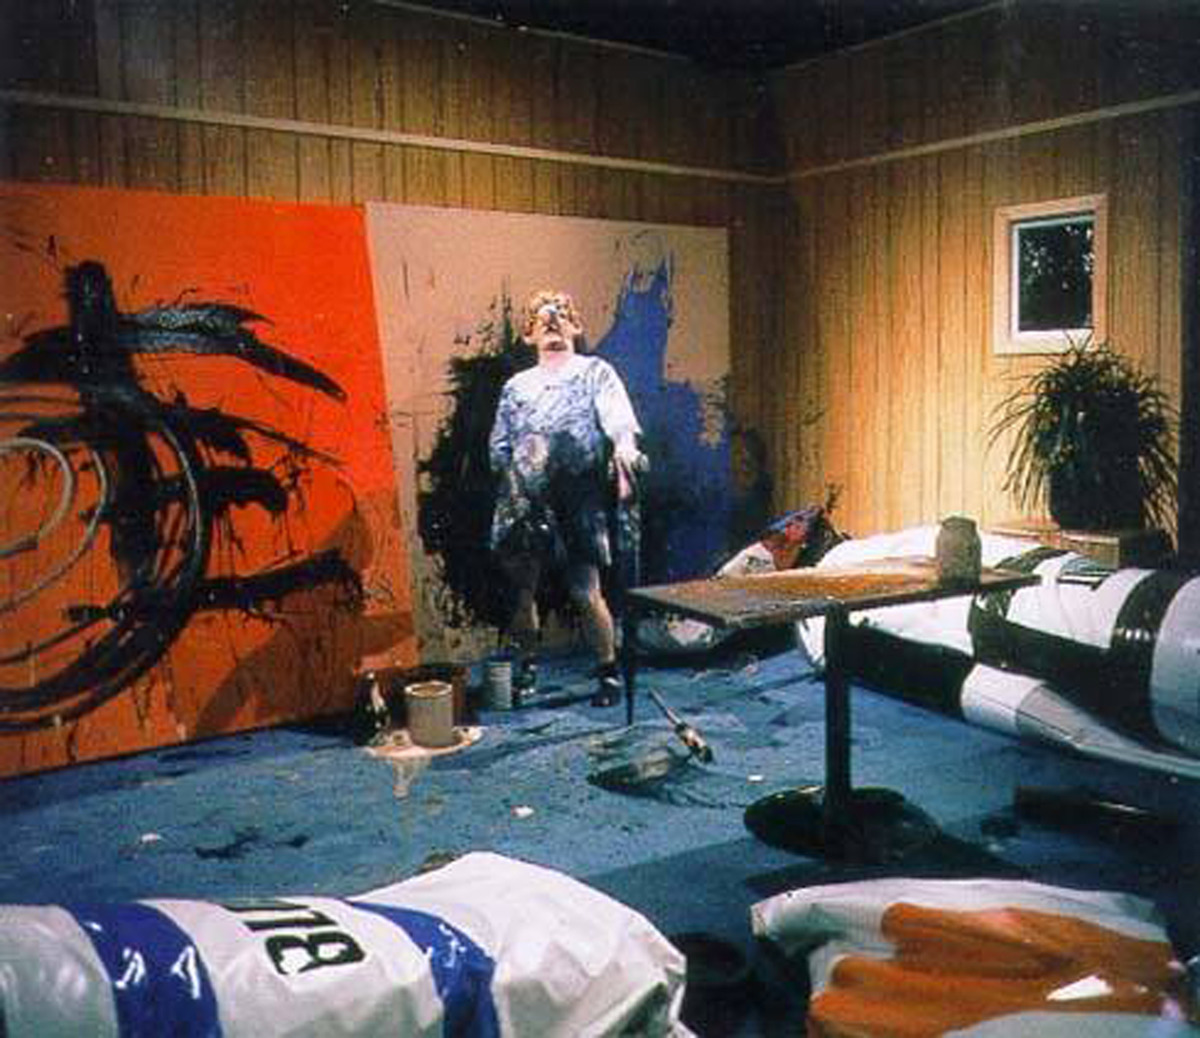 The Wick - Paul McCarthy, Painter, 1996.
© Paul McCarthy